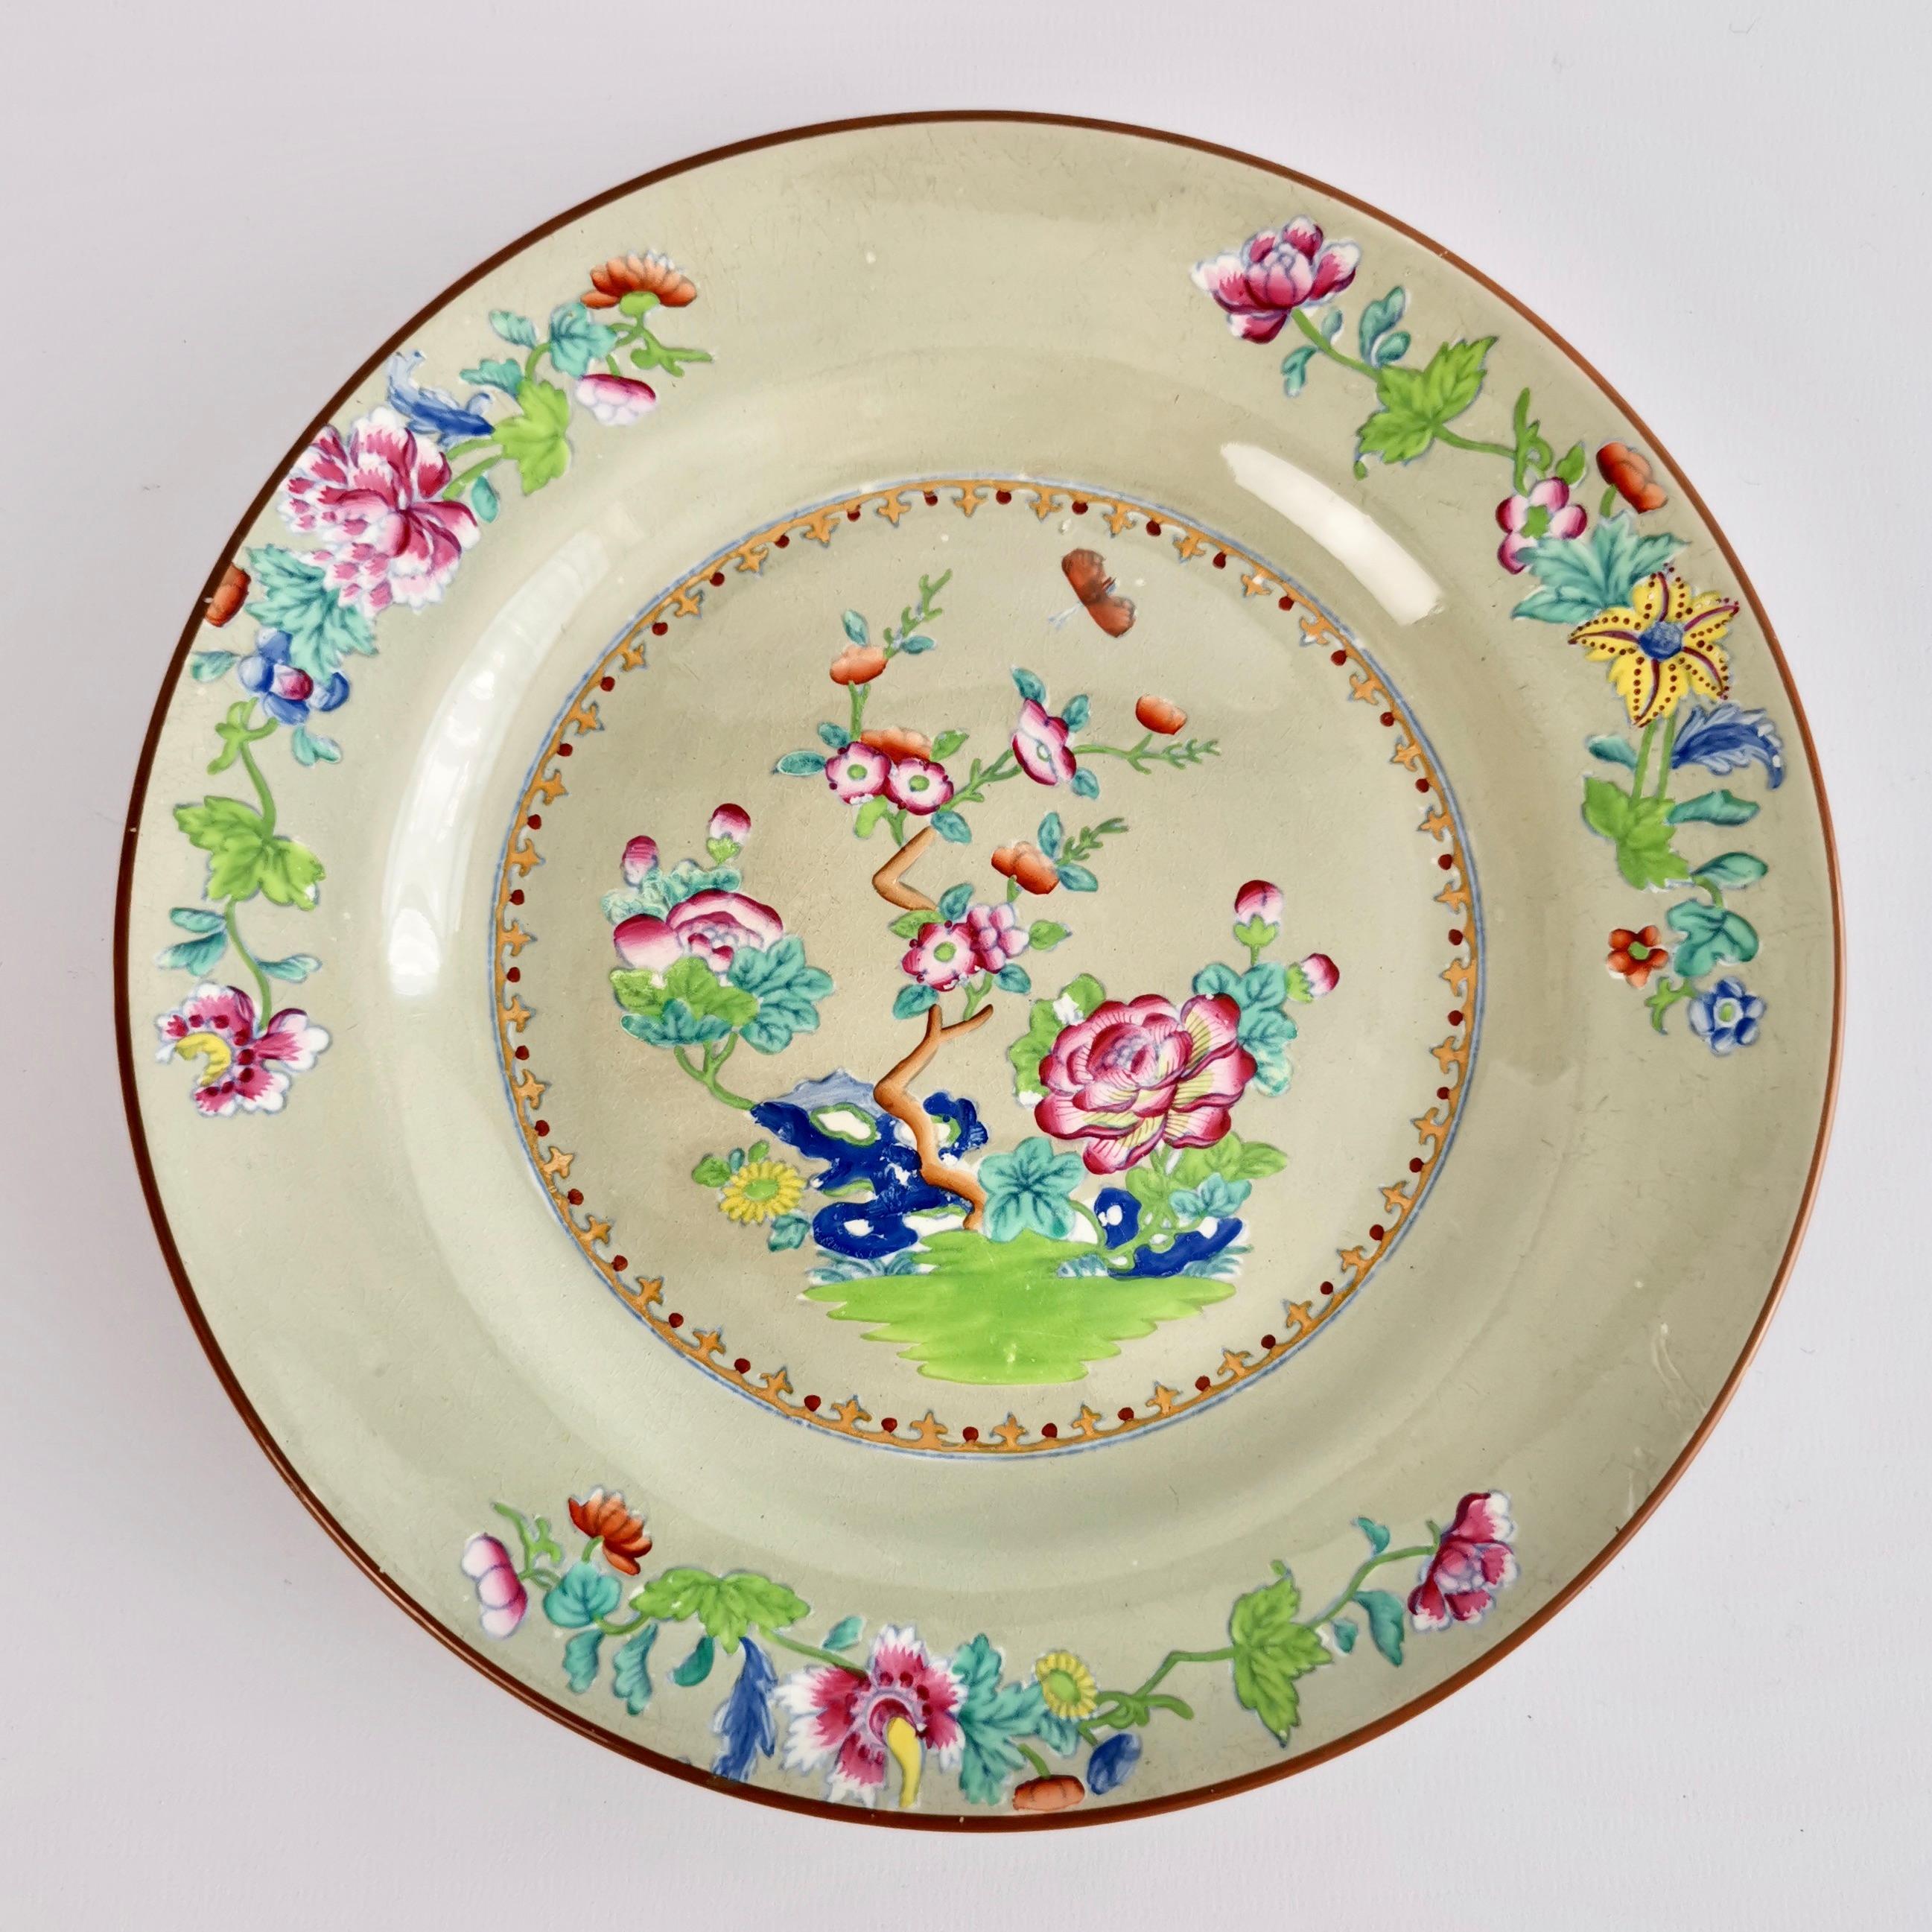 Hand-Painted Spode Creamware Dessert Service, Avocado Green, Chinoiserie, Regency, 1814 For Sale